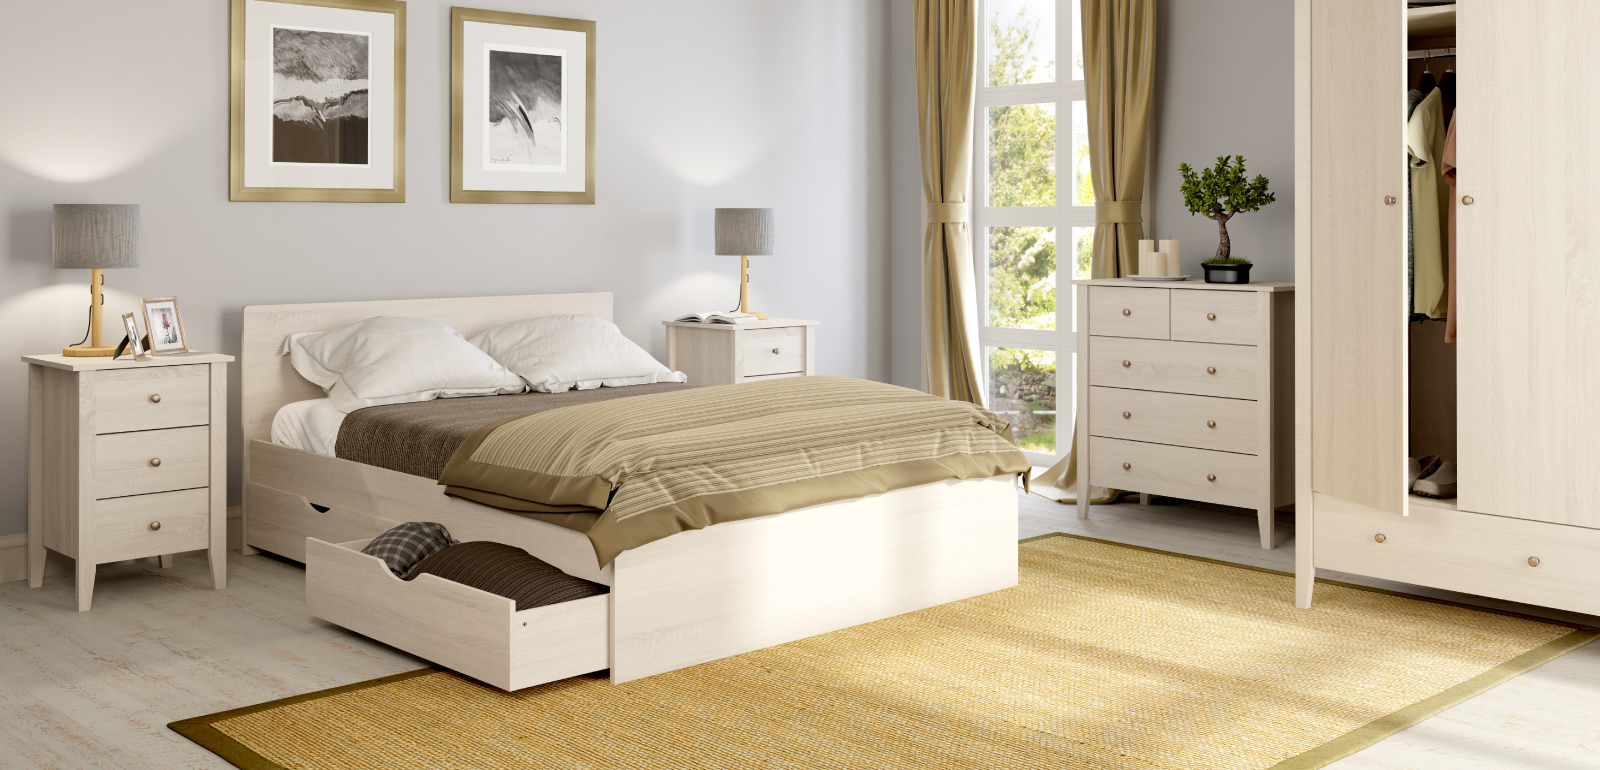 Beds Online: Beds Bedroom Furniture Online